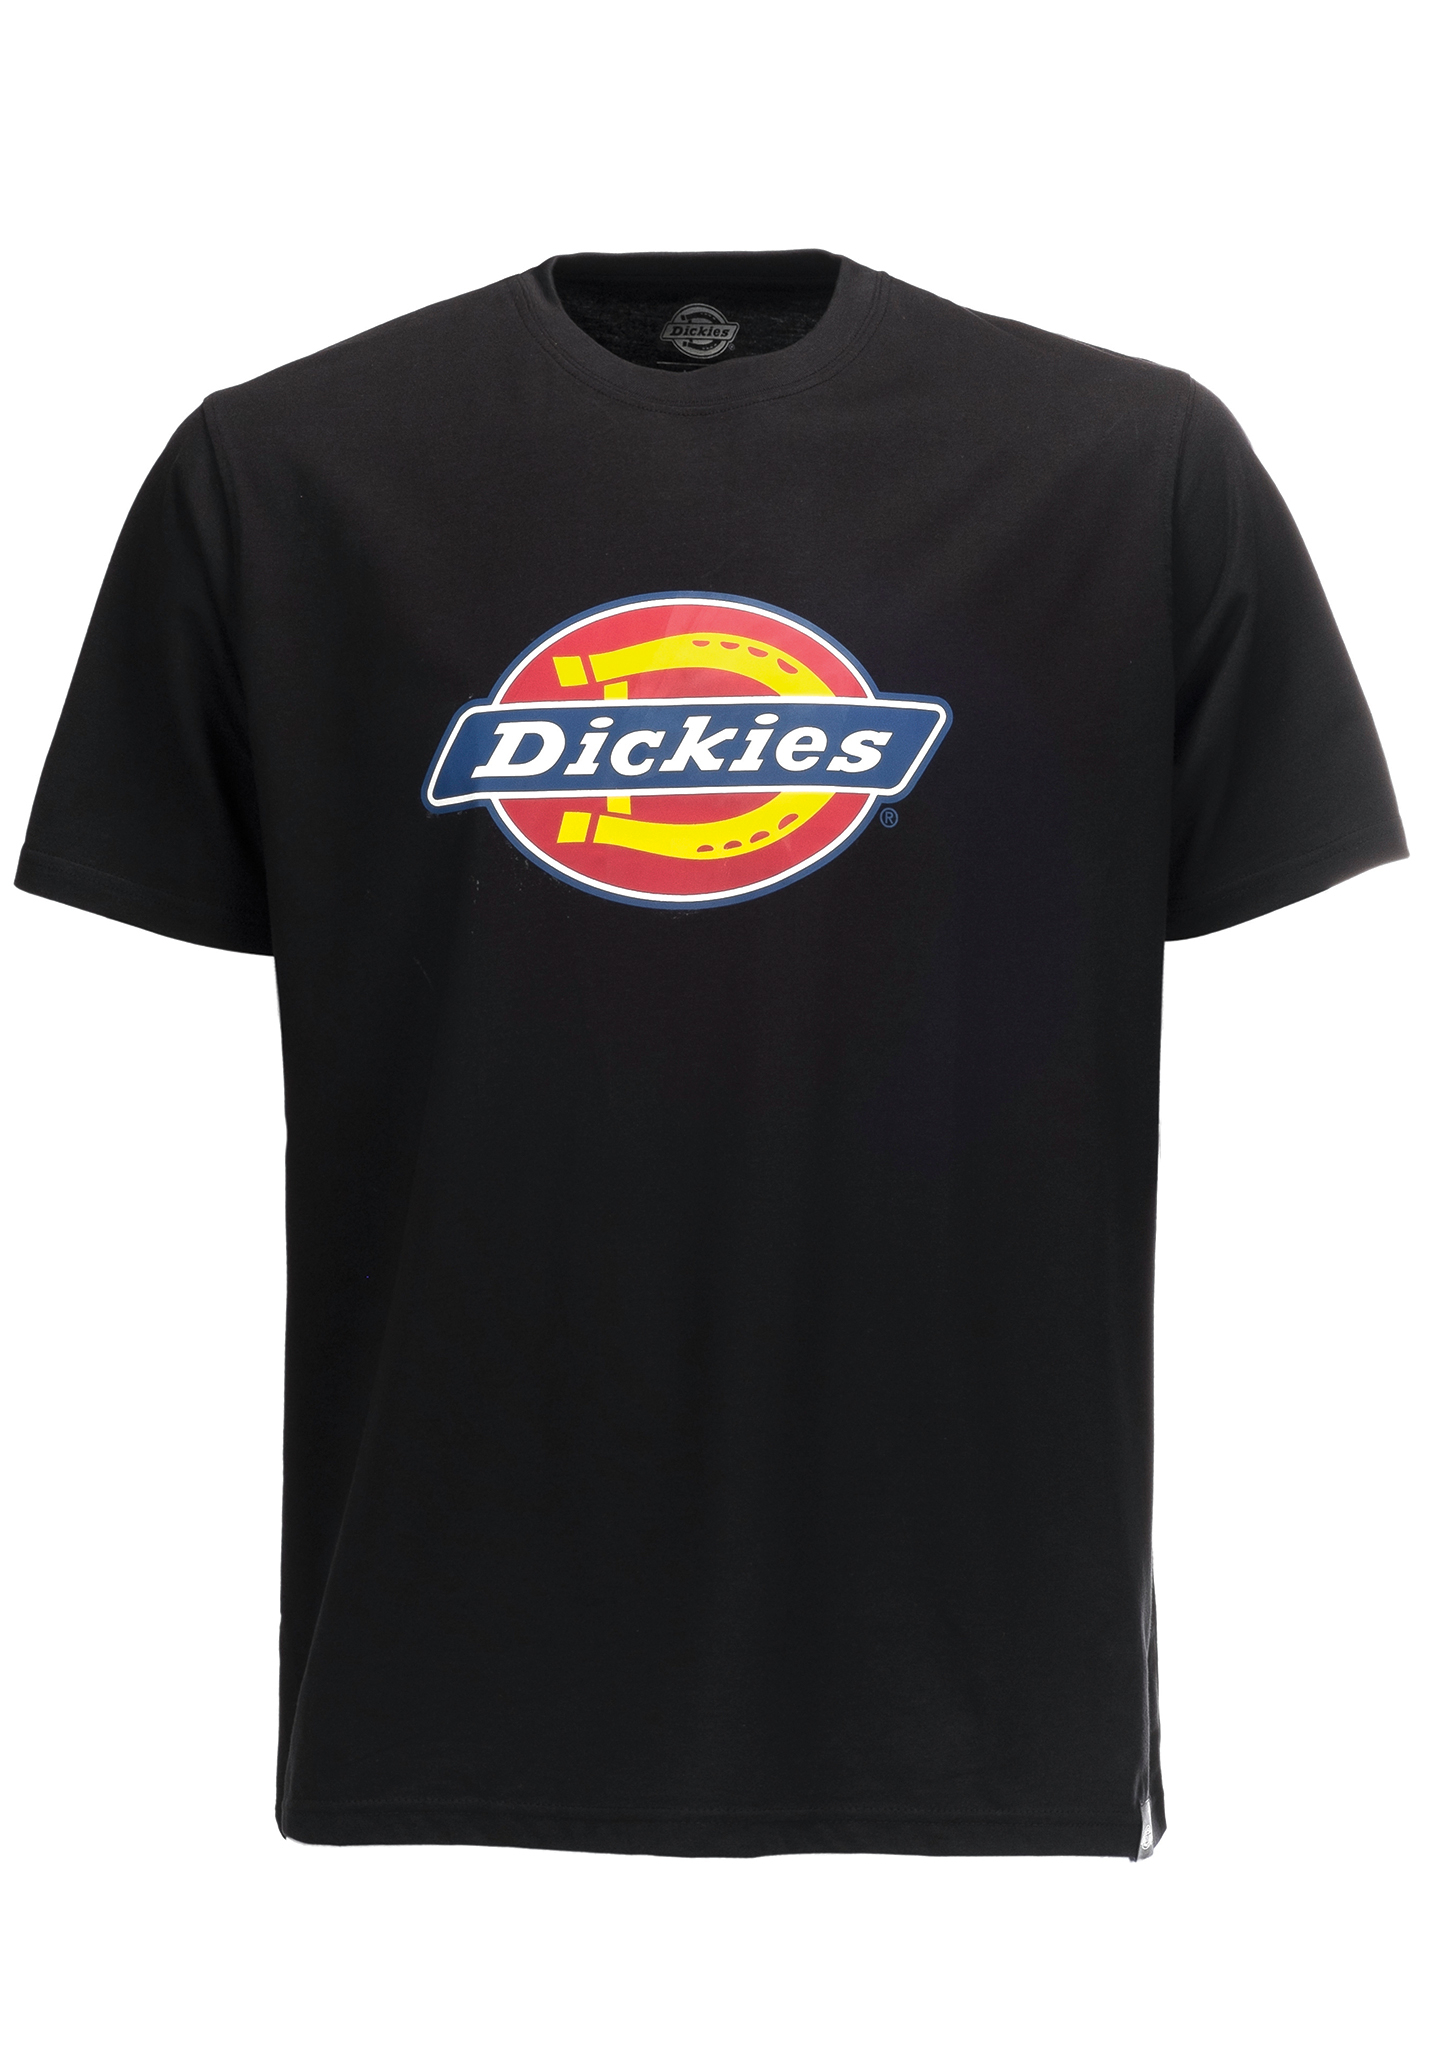 Dickies Horseshoe T-Shirt black XXXL